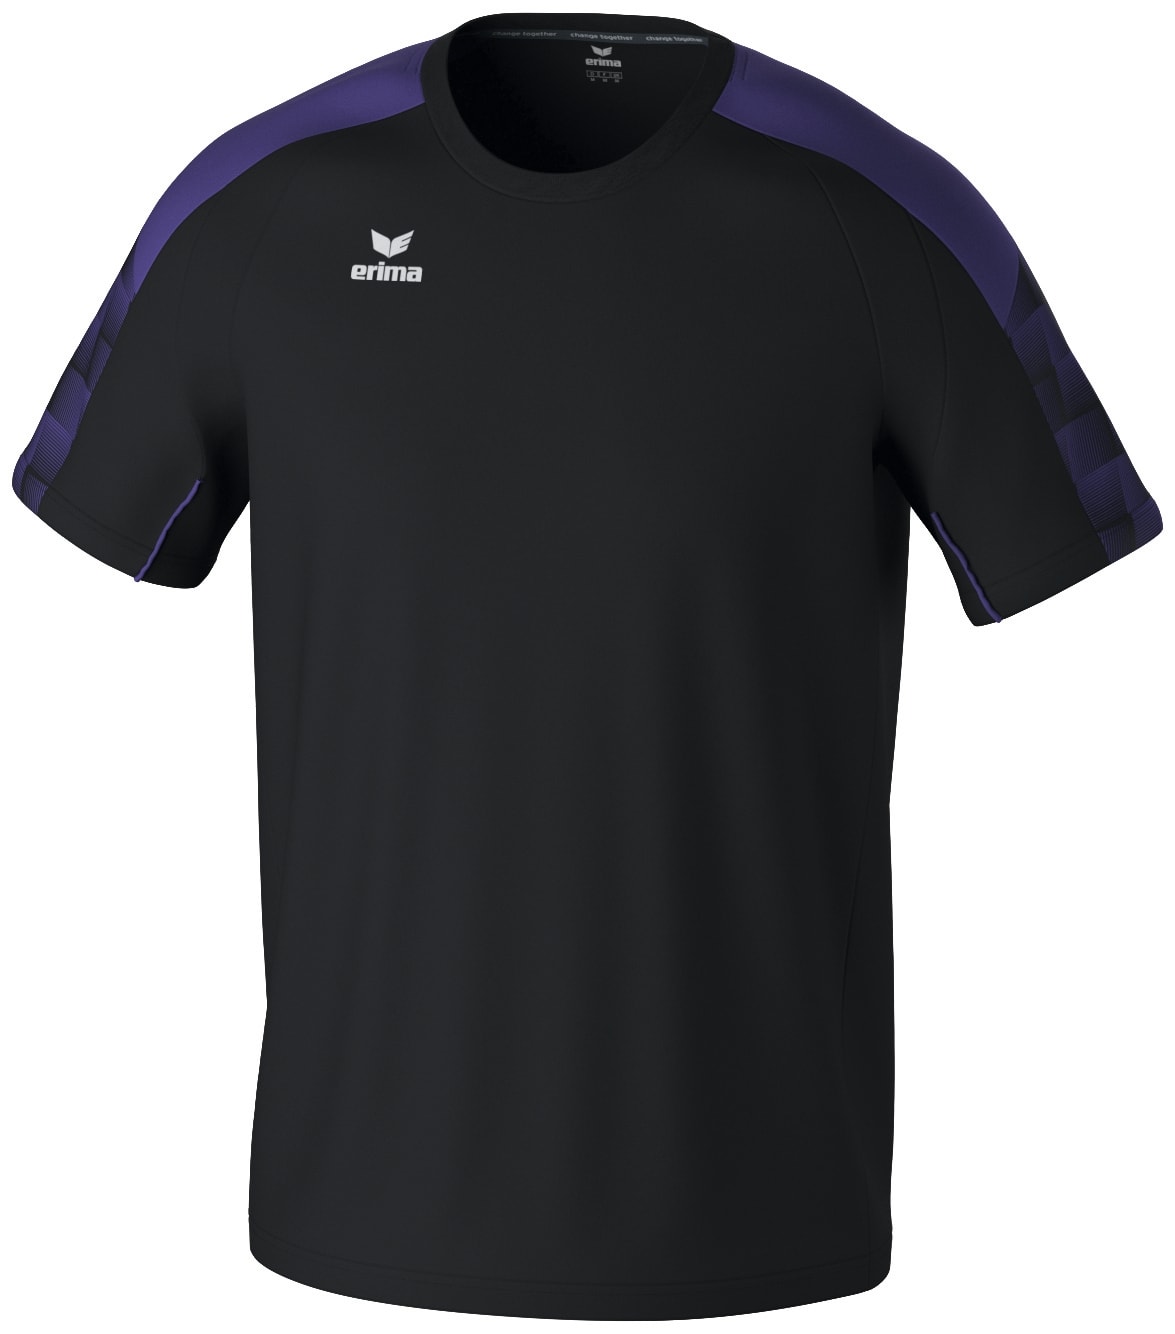 Erima EVO STAR T-Shirt schwarz ultra violet